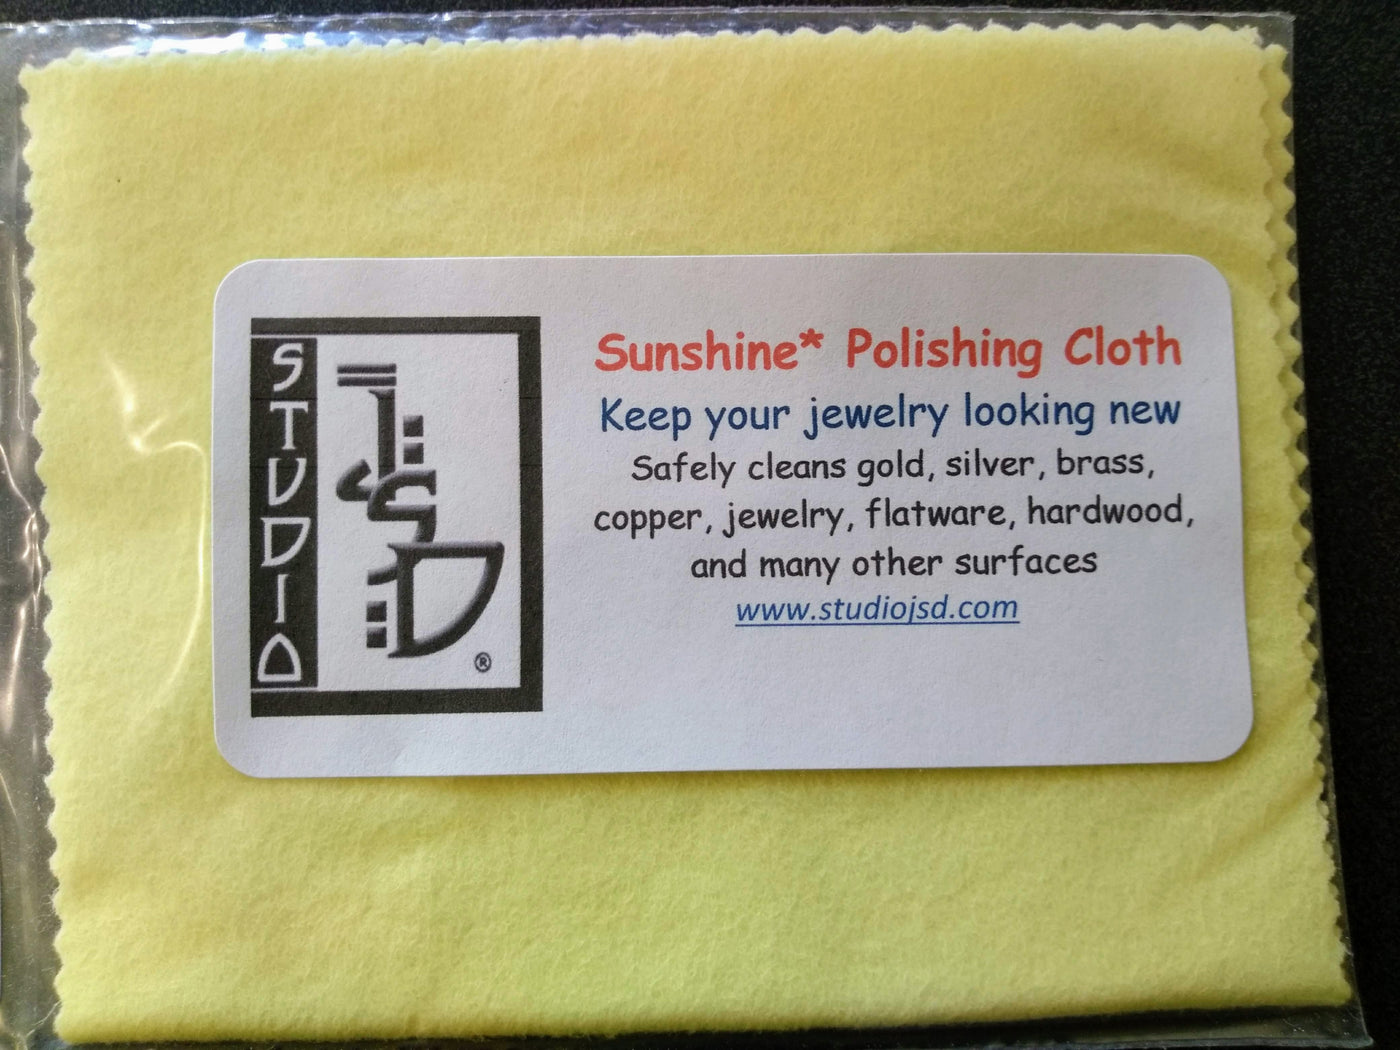 Sunshine* Polishing Cloth